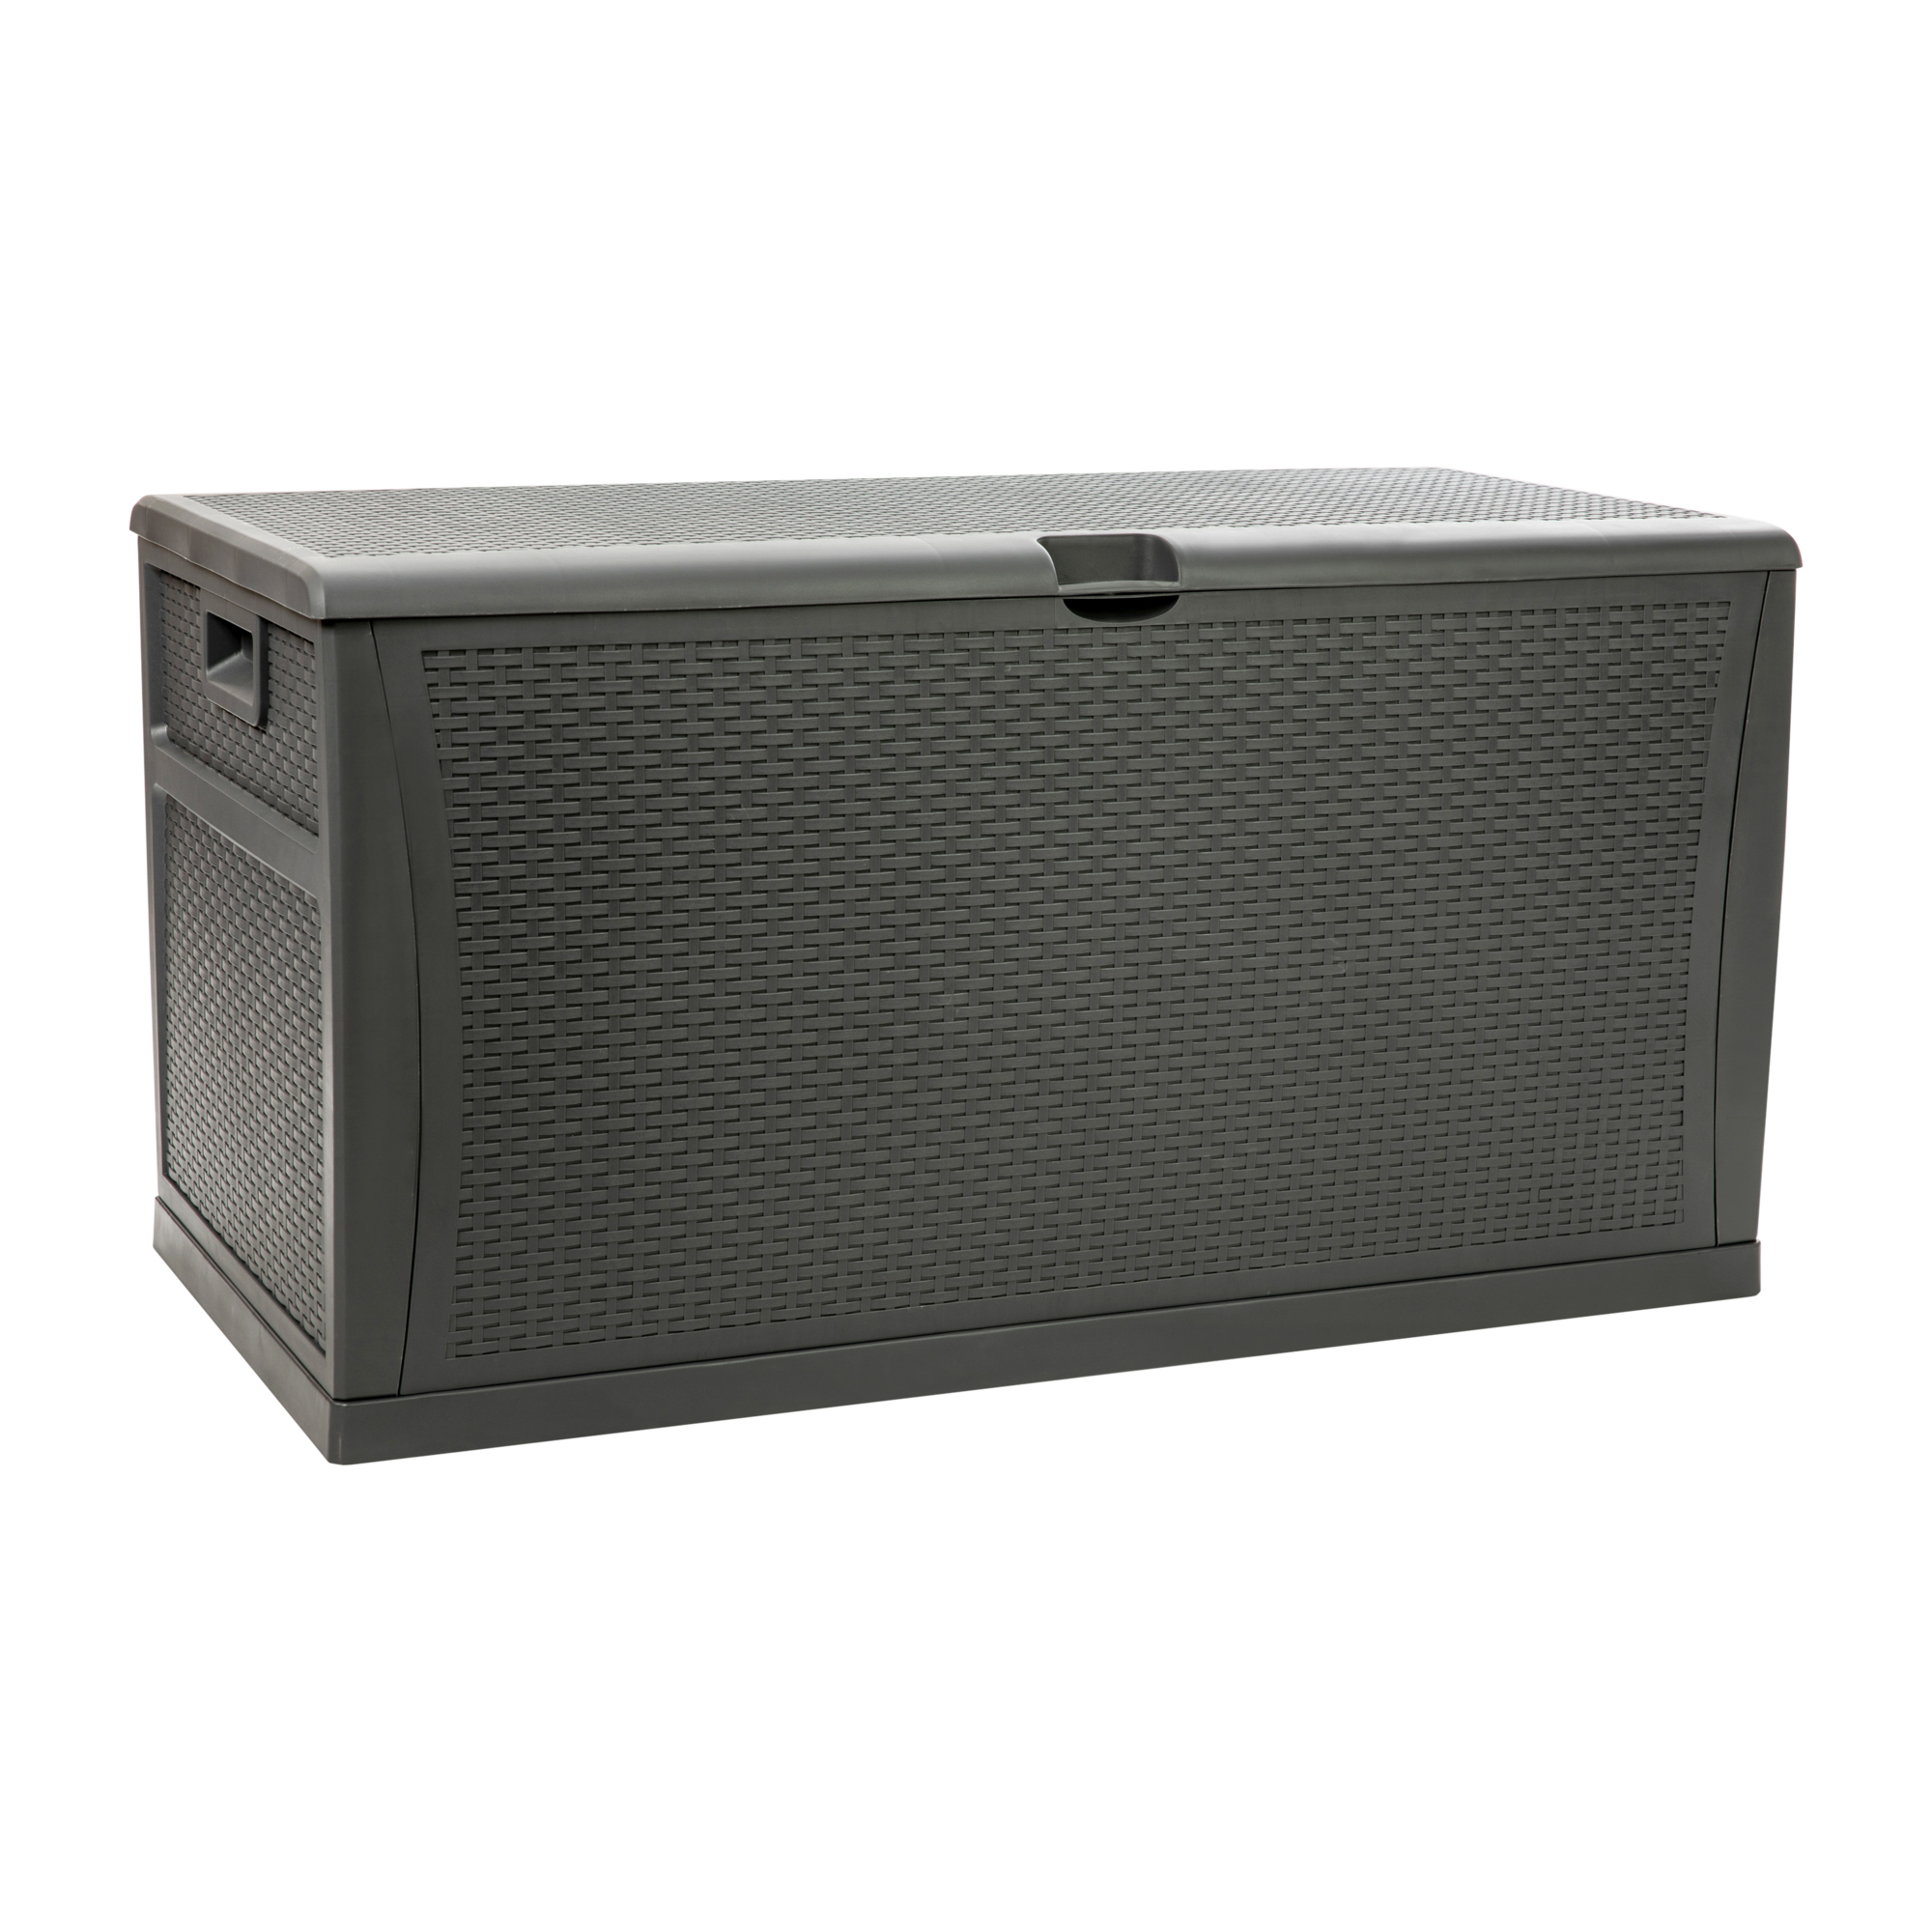 Flash Furniture, Gray 120 Gallon Plastic Deck Box Outdoor Storage, Capacity 120 Gal, Model QTKTL4023GY